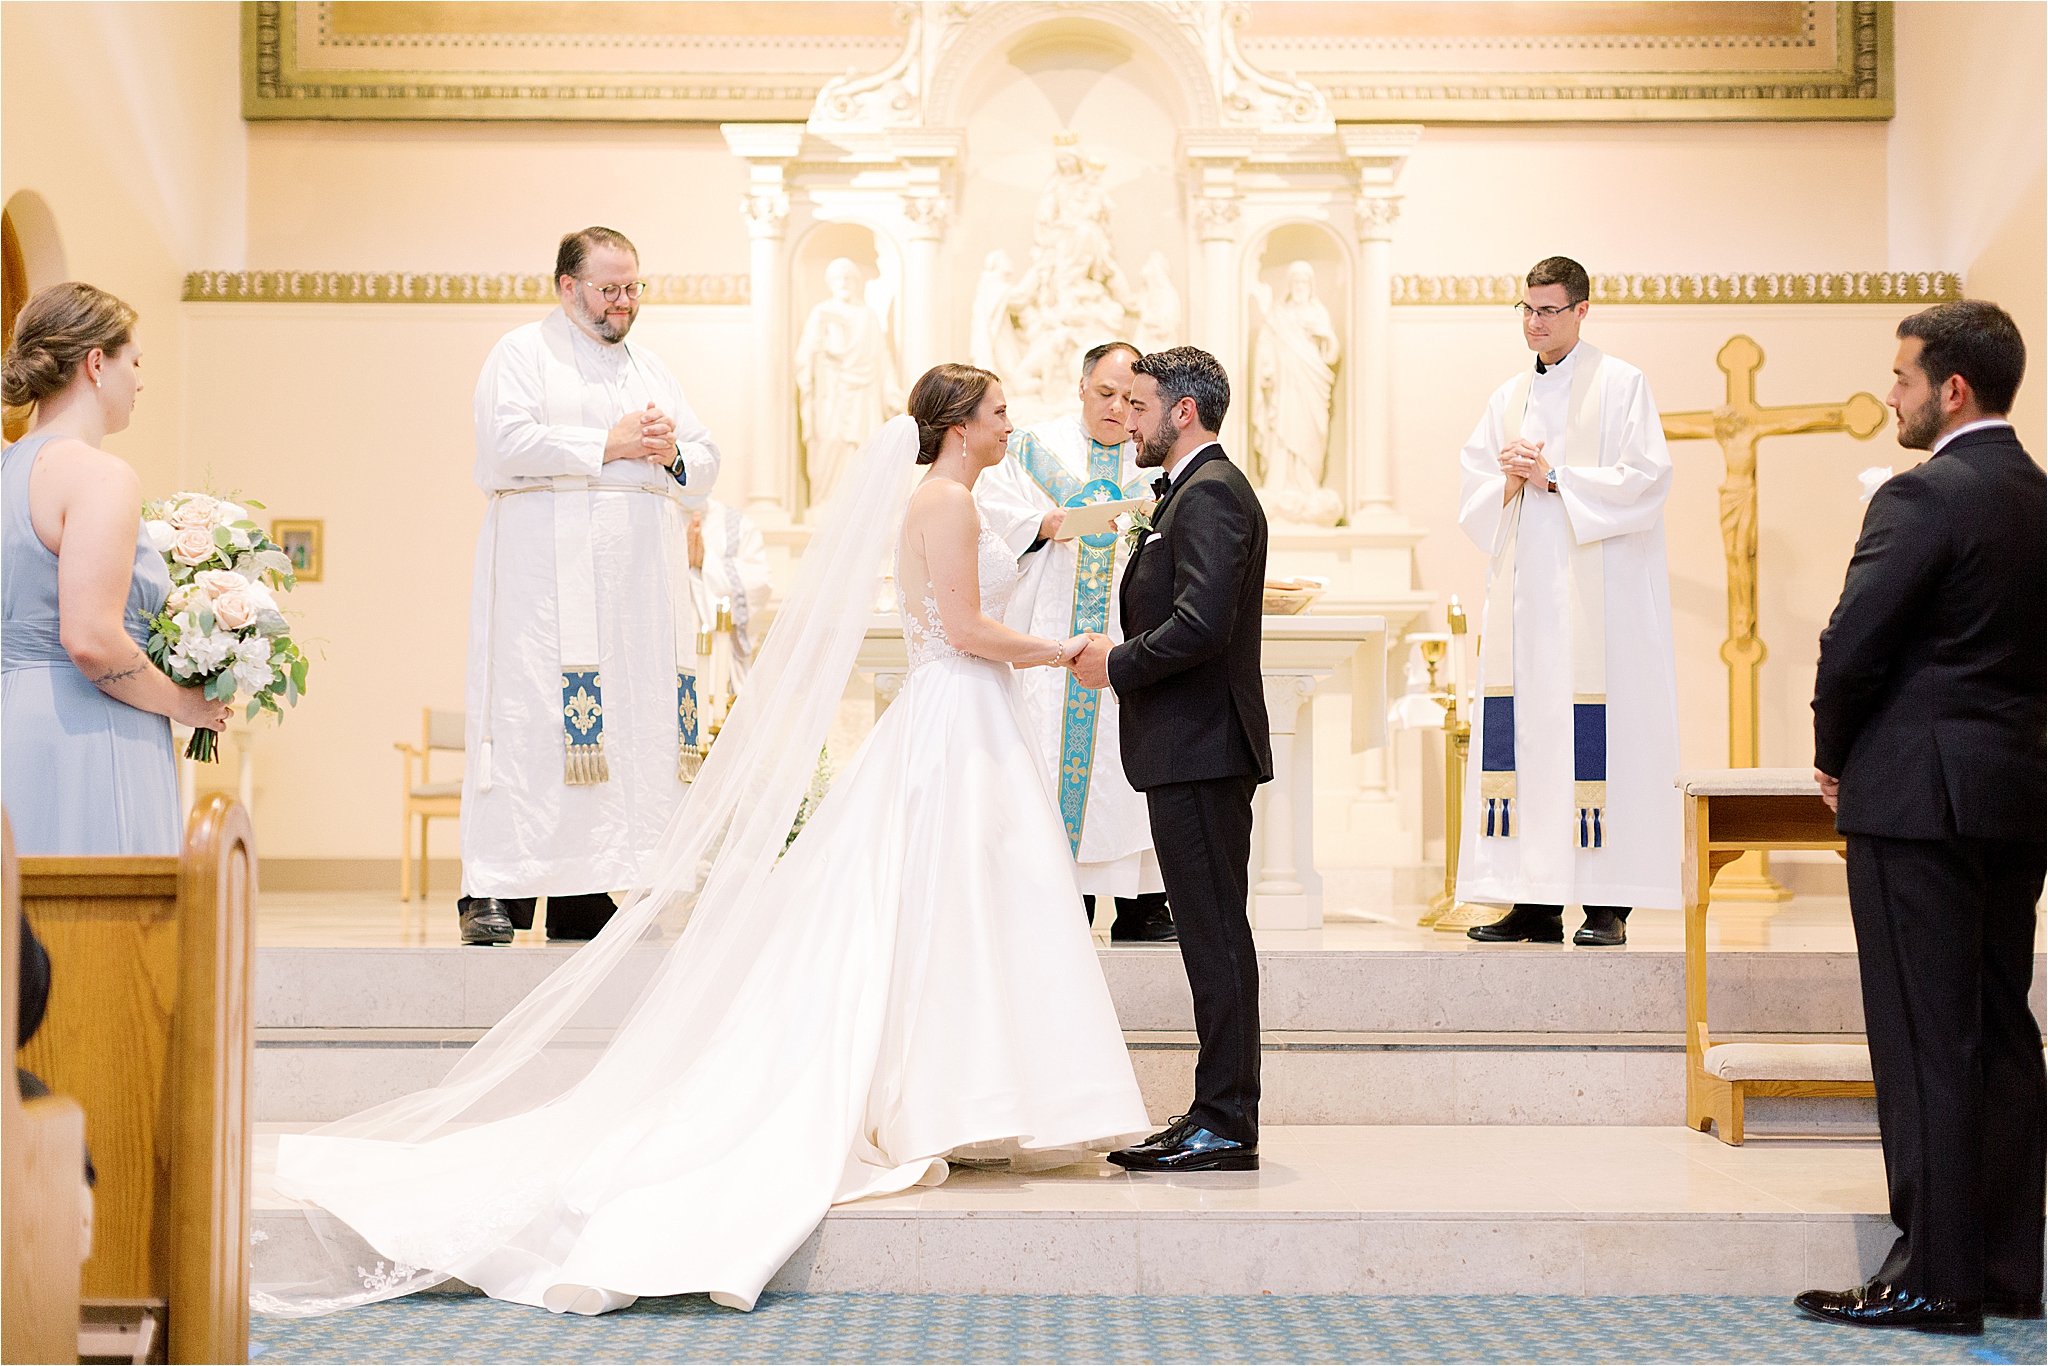 Little Italy Wedding ceremony in Cleveland Ohio